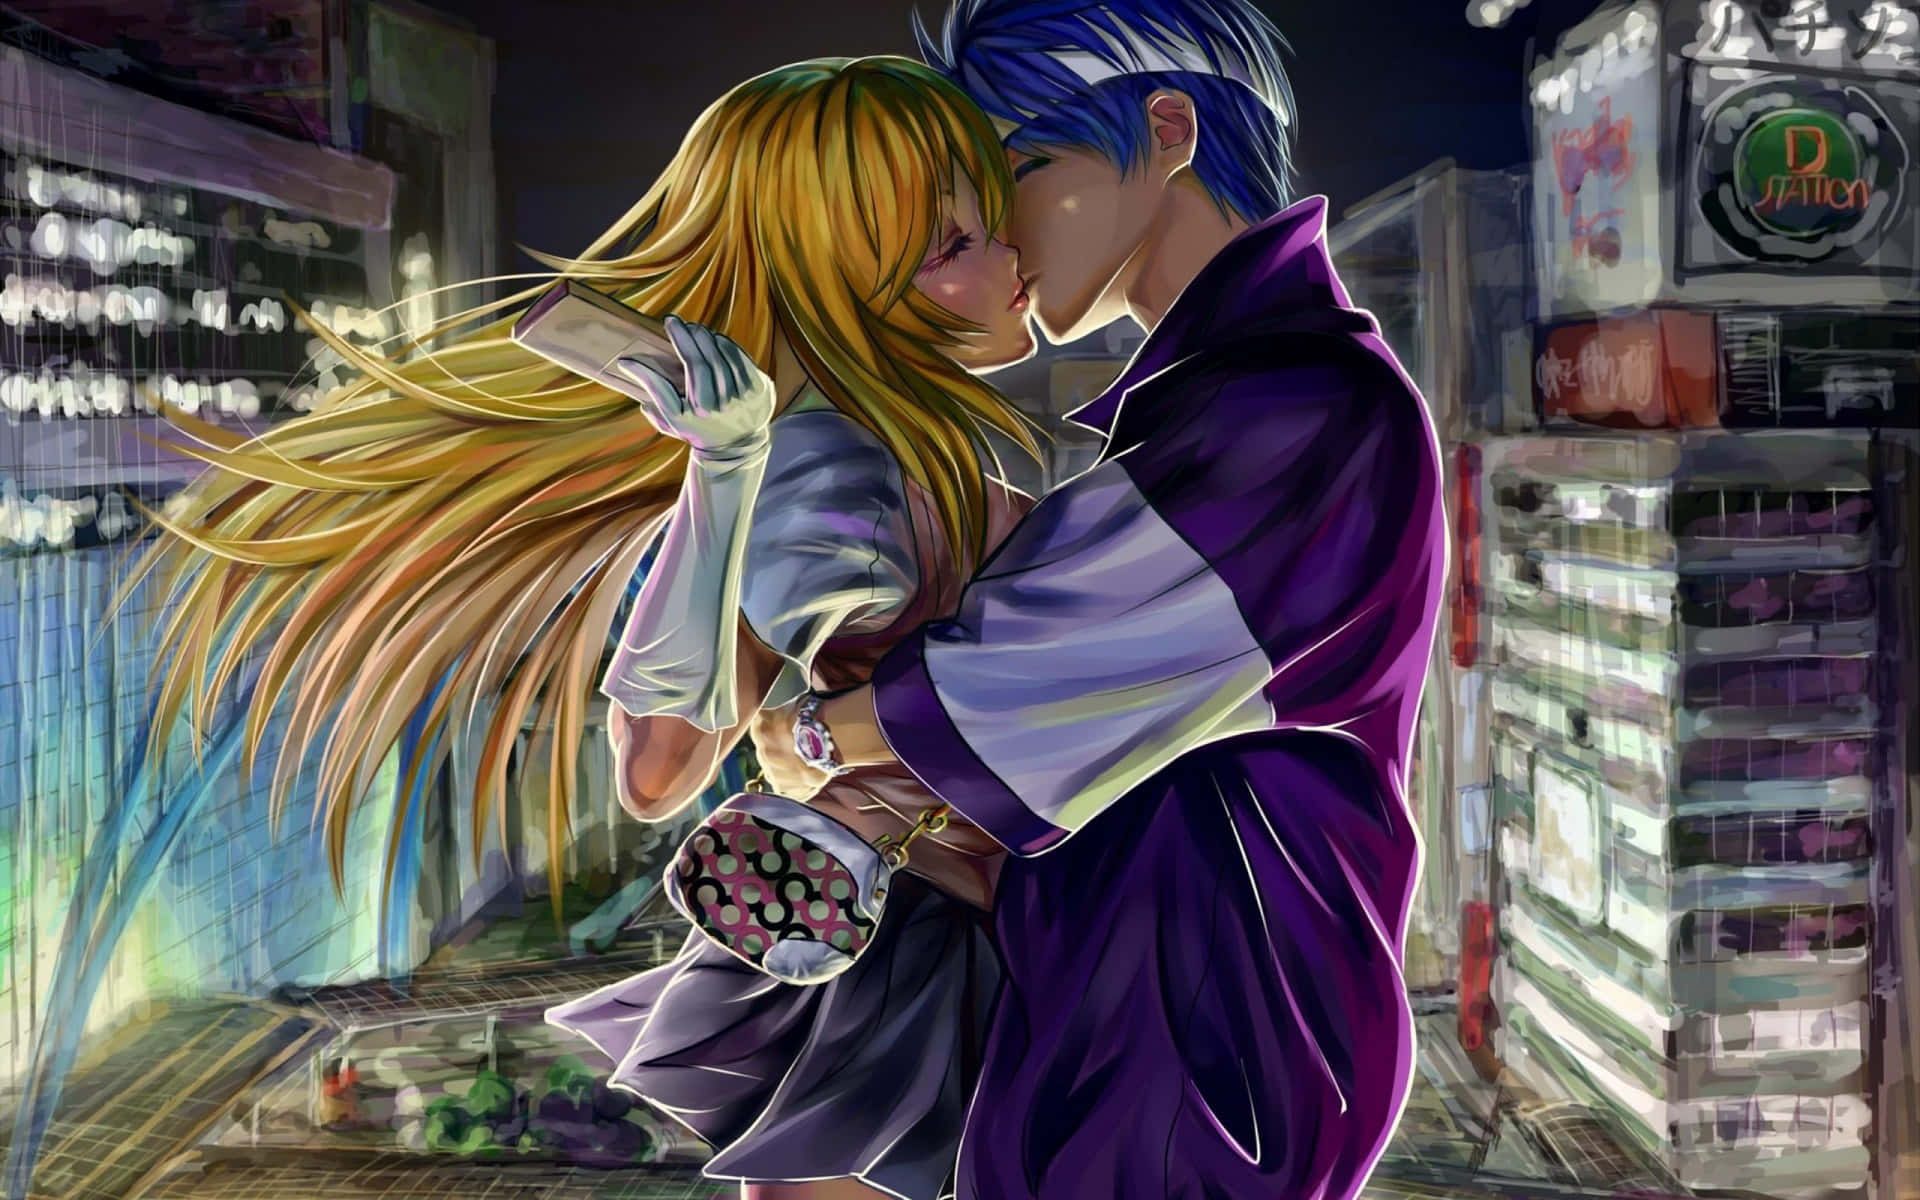 Top 50 Most Popular High School Romance Anime | Wealth of Geeks